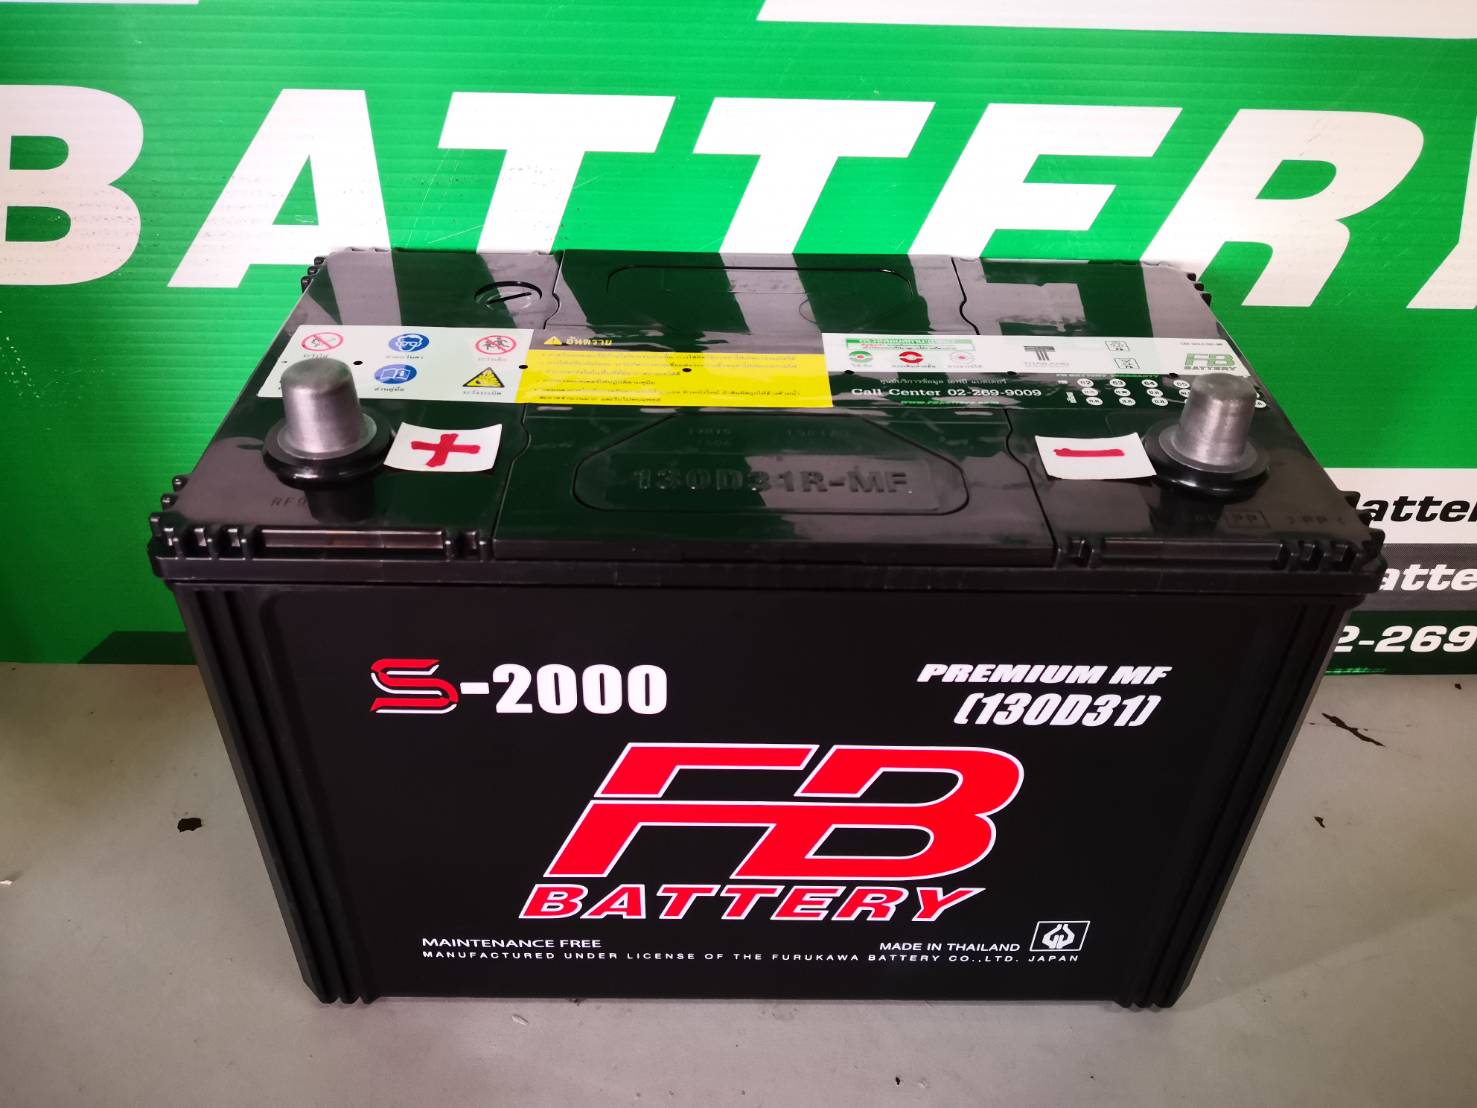 FB แบตเตอรี่ 12V100แอมป์ (800CCA) รุ่น S-2000R 130D31R-MF ขั้ว R ขวา ยาว30.4ซม.กว้าง17.1ซม. แกะกล่องใช้ได้เลย เป็นแบตระบบกึ่งแห้ง รับประกันโดย Siam Battery